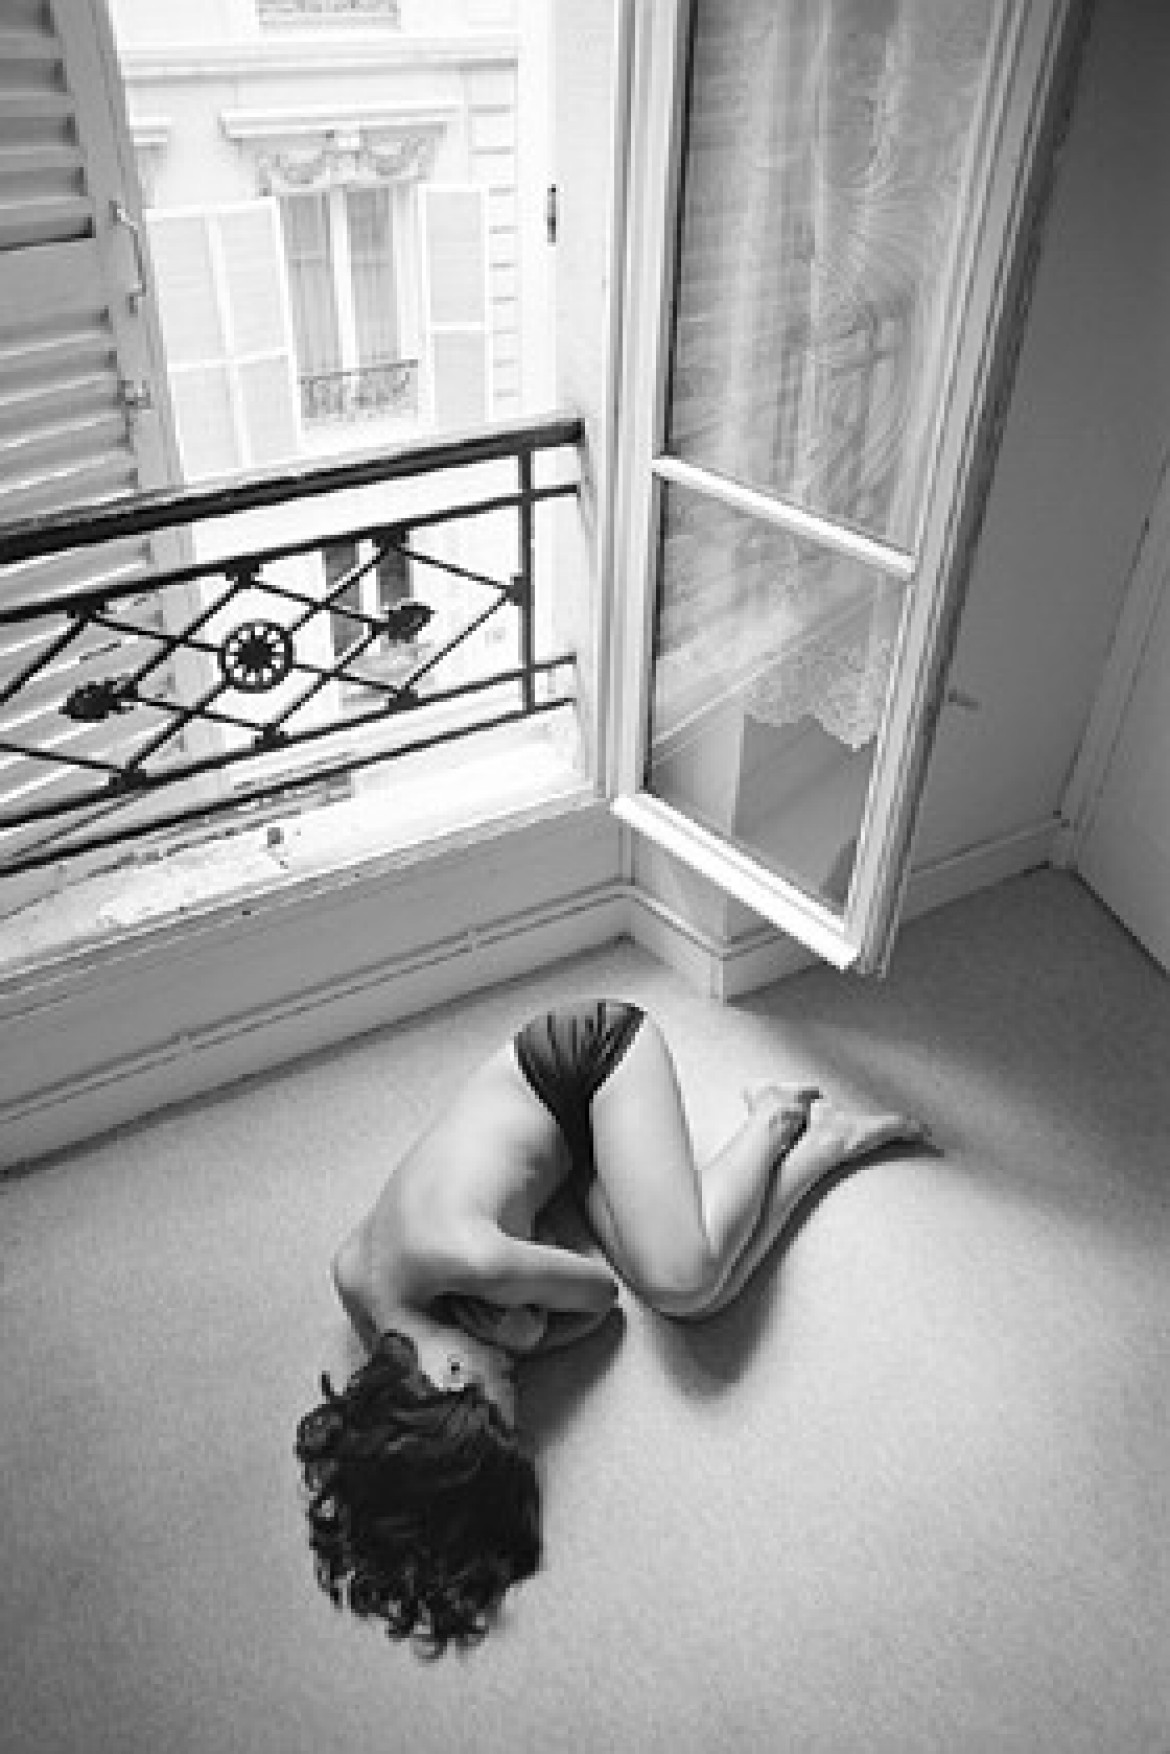 "Morning in Paris (1)" - fot. Tomasz Jankowski